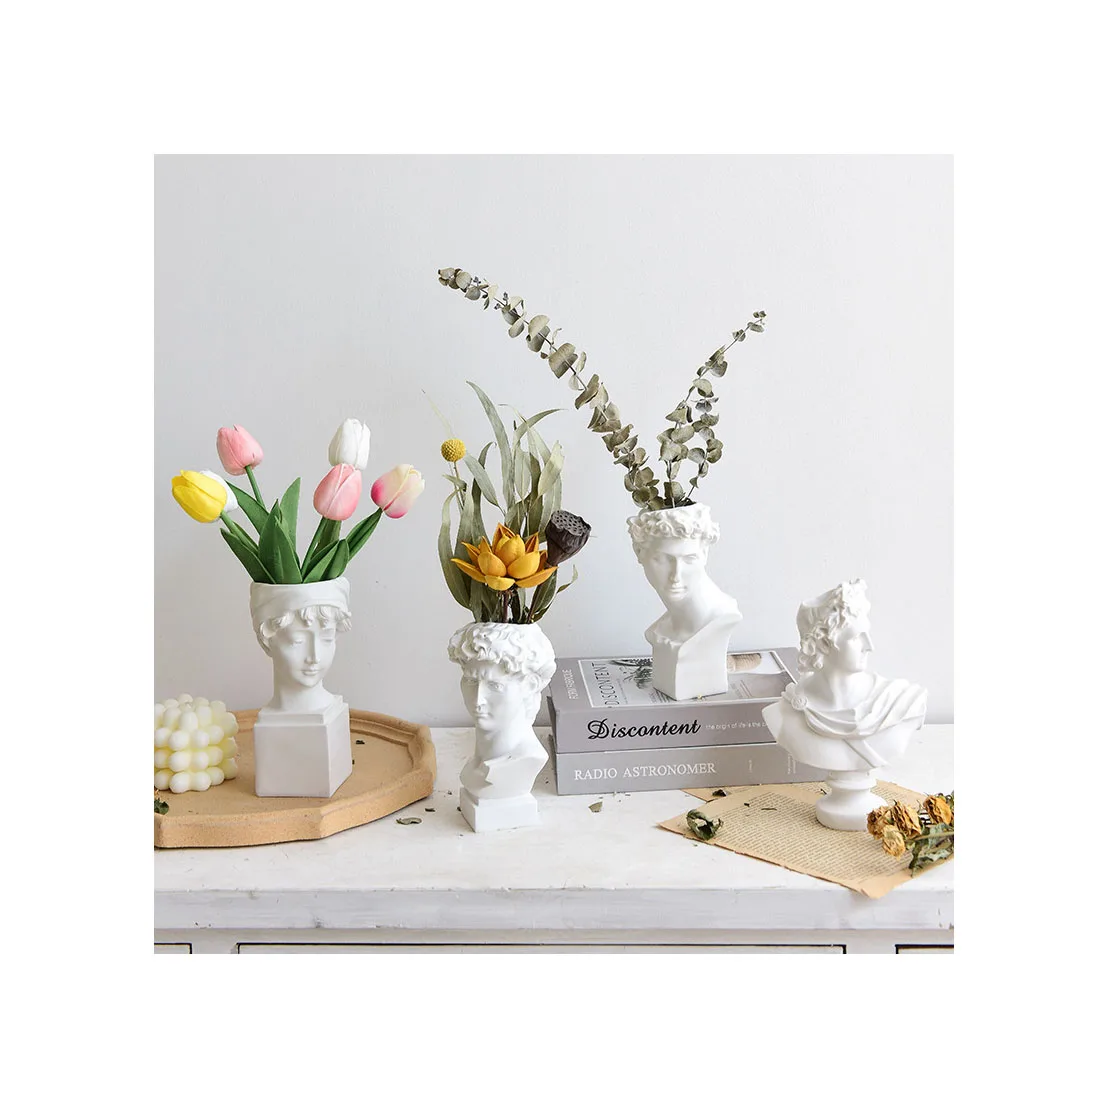 2023 new design hot sell living room furniture household products home decor flower vases David head vases Plastic vases